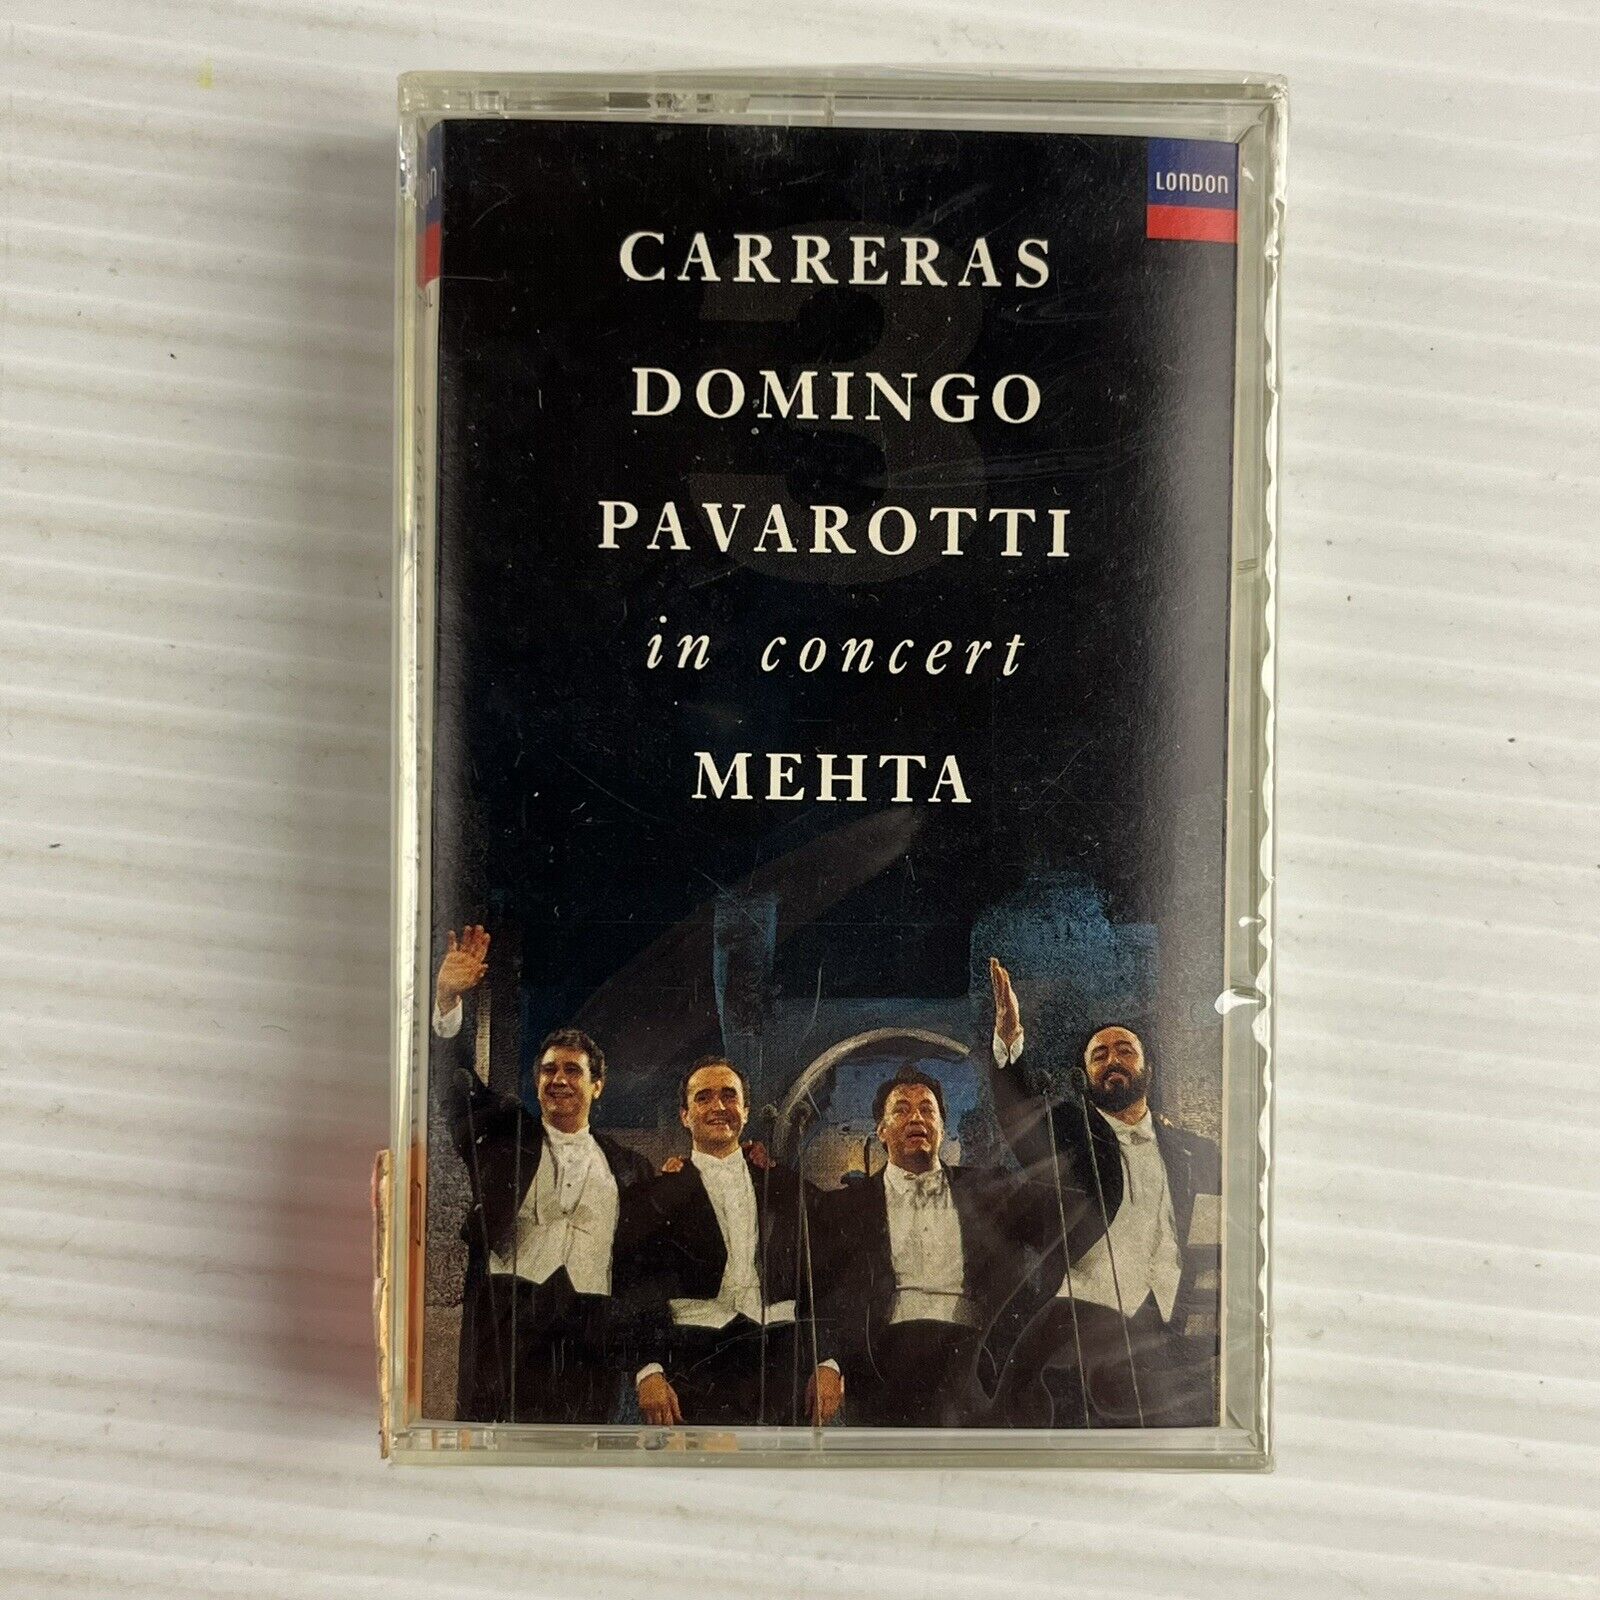 Carreras/Domingo/Pavarotti In Concert-Mehta Cassette 1990 Decca